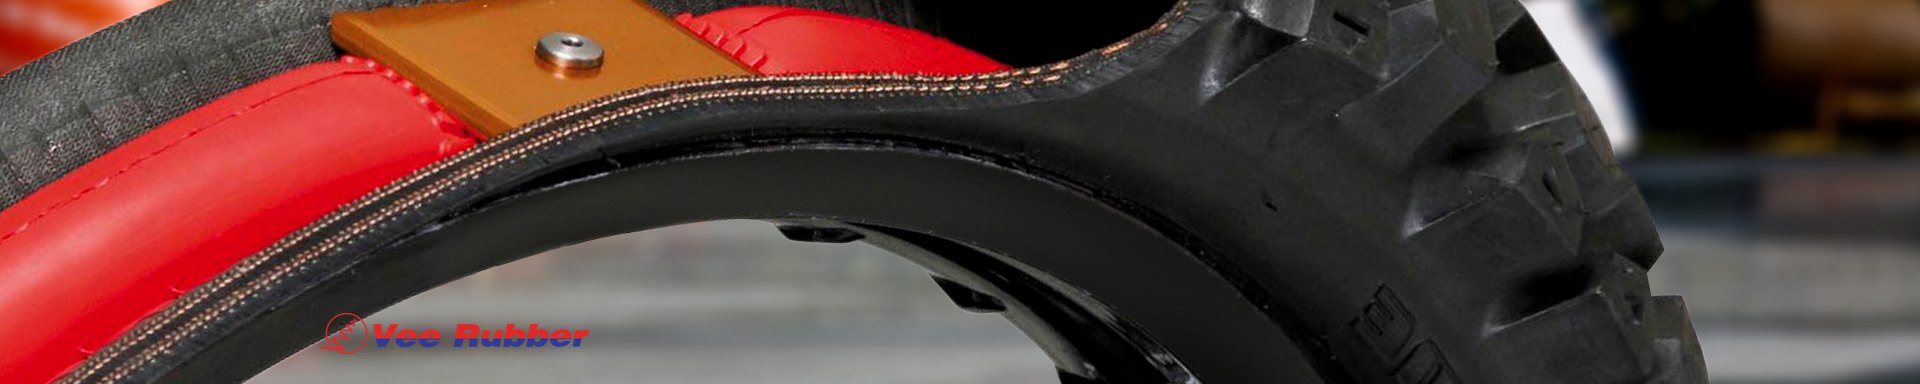 Vee Rubber Motorcycle Wheels & Tires Accessories